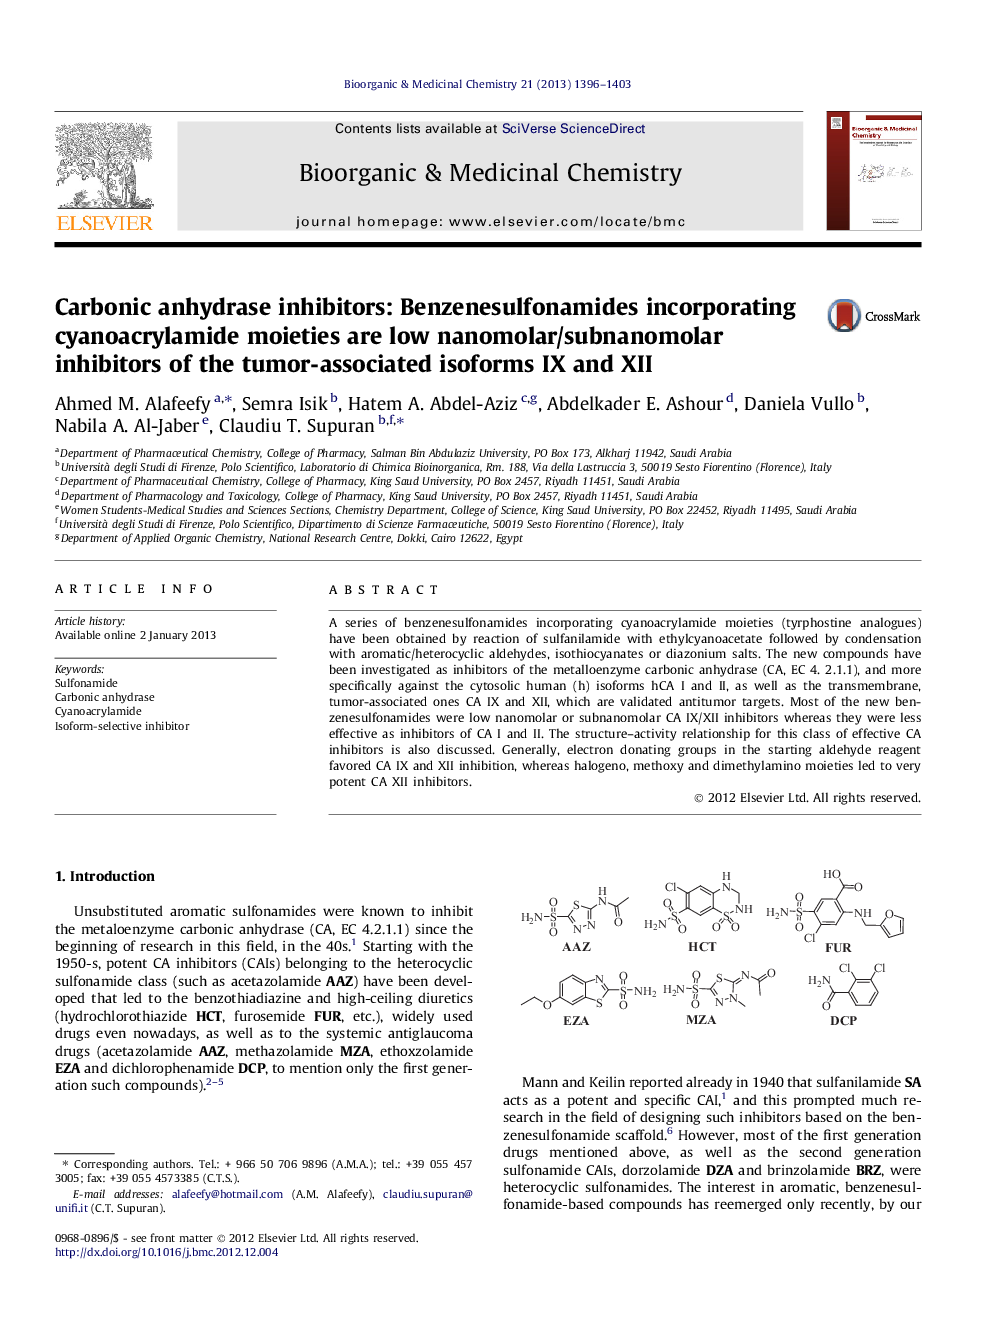 Carbonic anhydrase inhibitors: Benzenesulfonamides incorporating cyanoacrylamide moieties are low nanomolar/subnanomolar inhibitors of the tumor-associated isoforms IX and XII